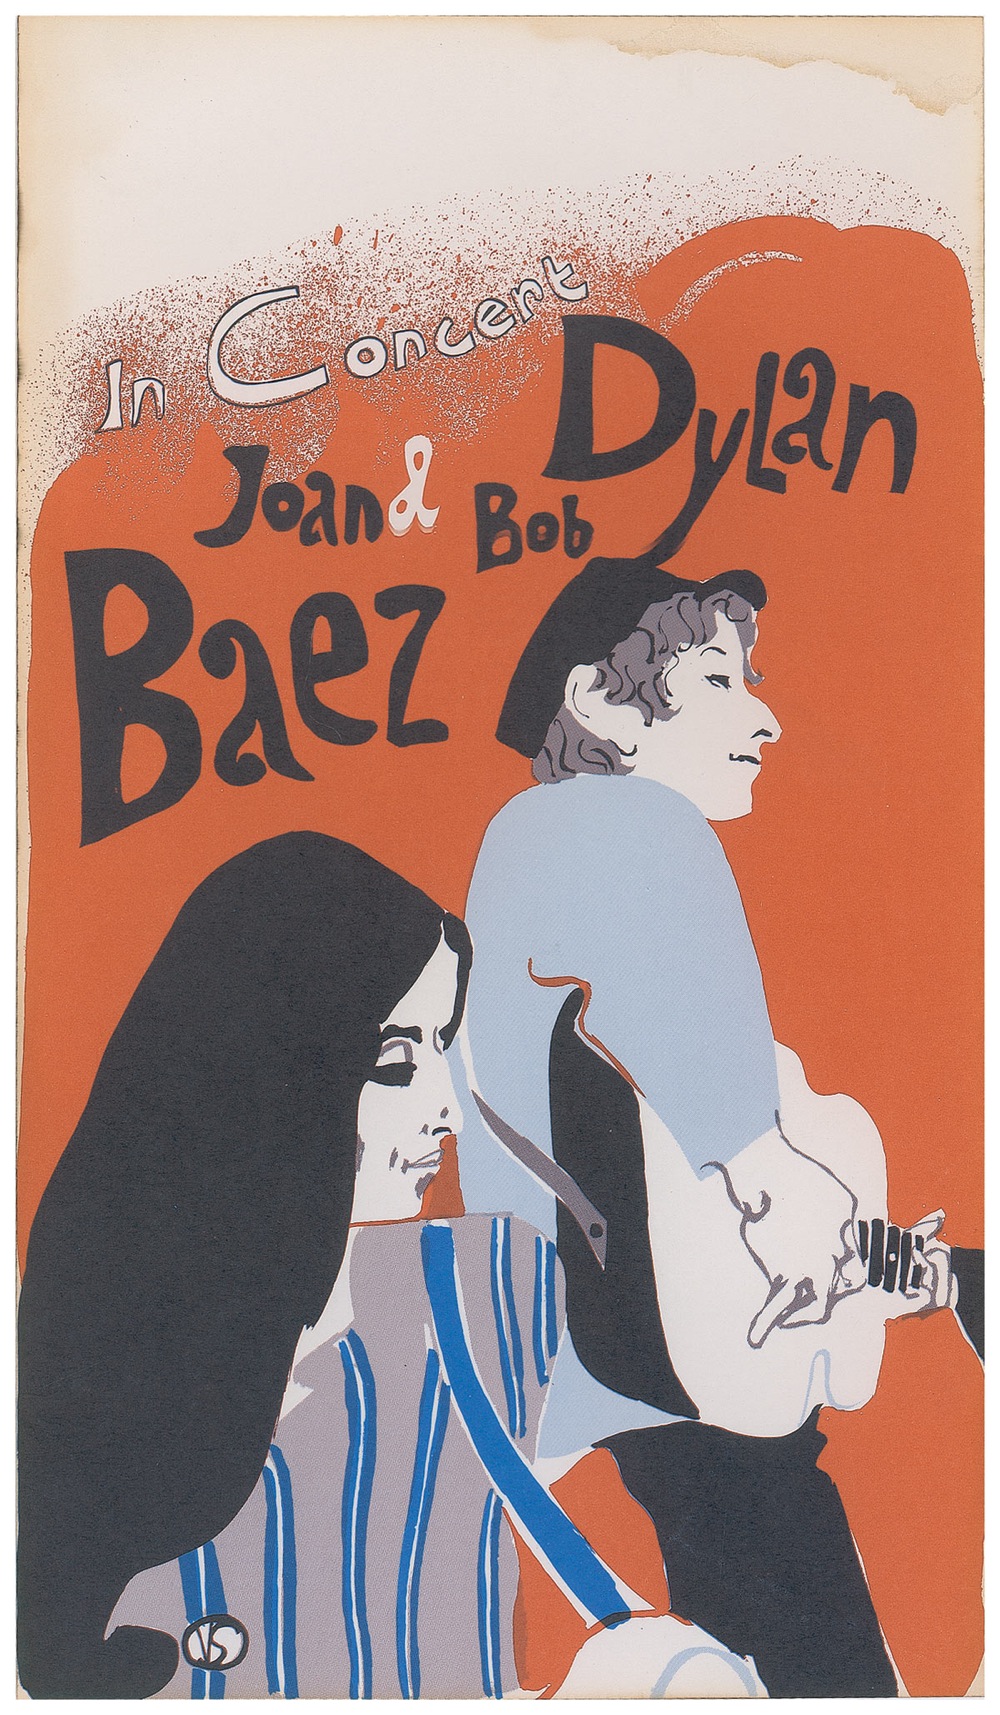 Lot #289 Bob Dylan and Joan Baez